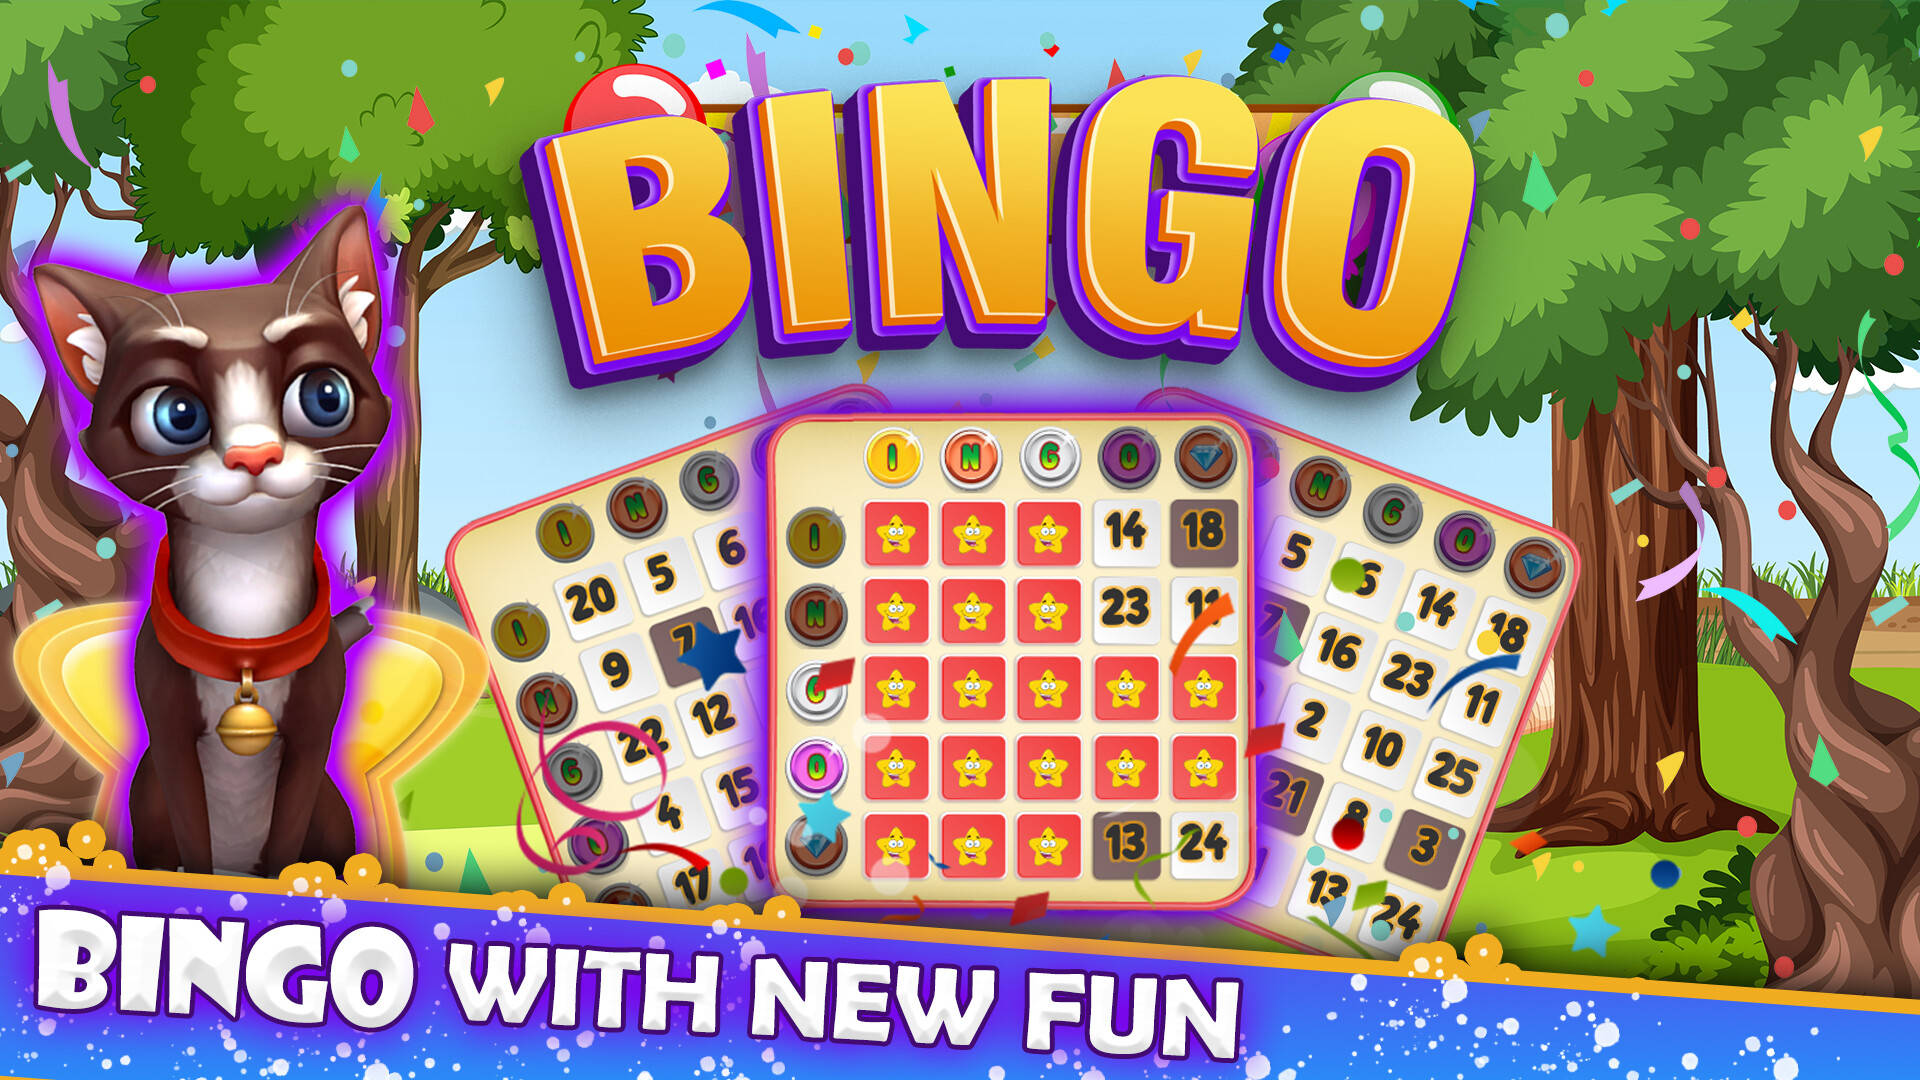 Free Bingo Wallpaper Downloads, [100+] Bingo Wallpapers for FREE |  